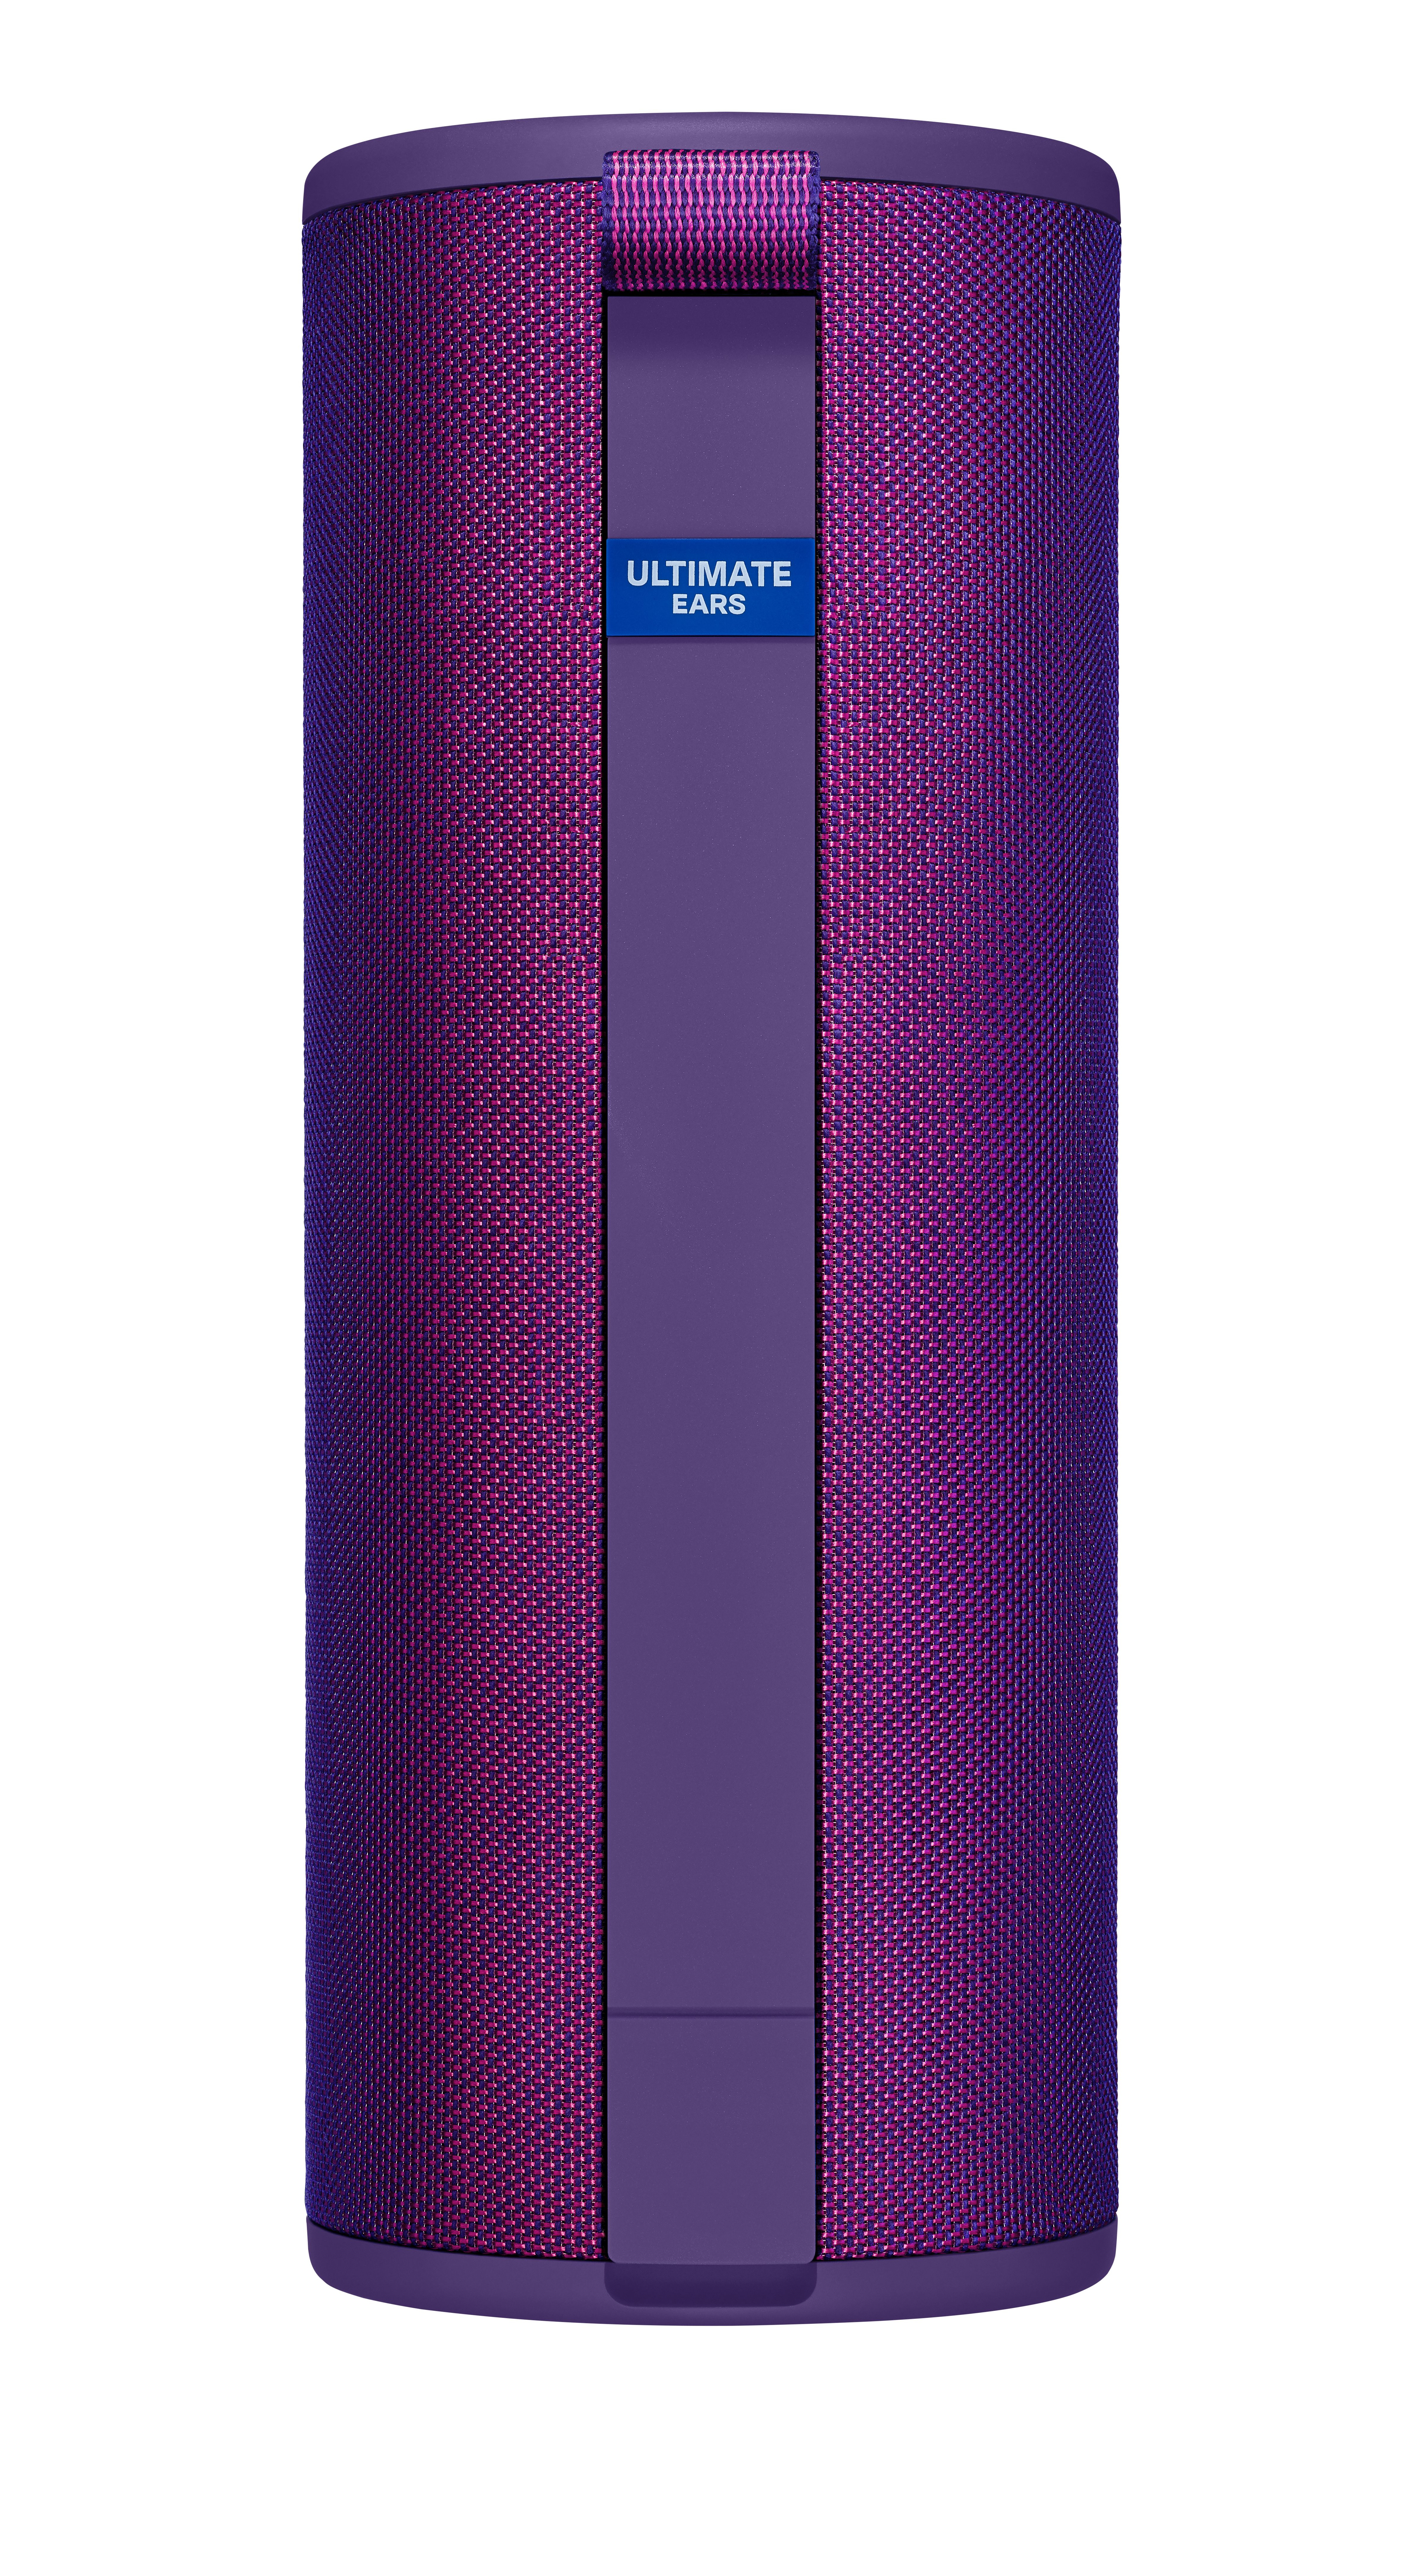 Logitech Megaboom 3 - Ultraviolet Purple - Lautsprecher - 2.1